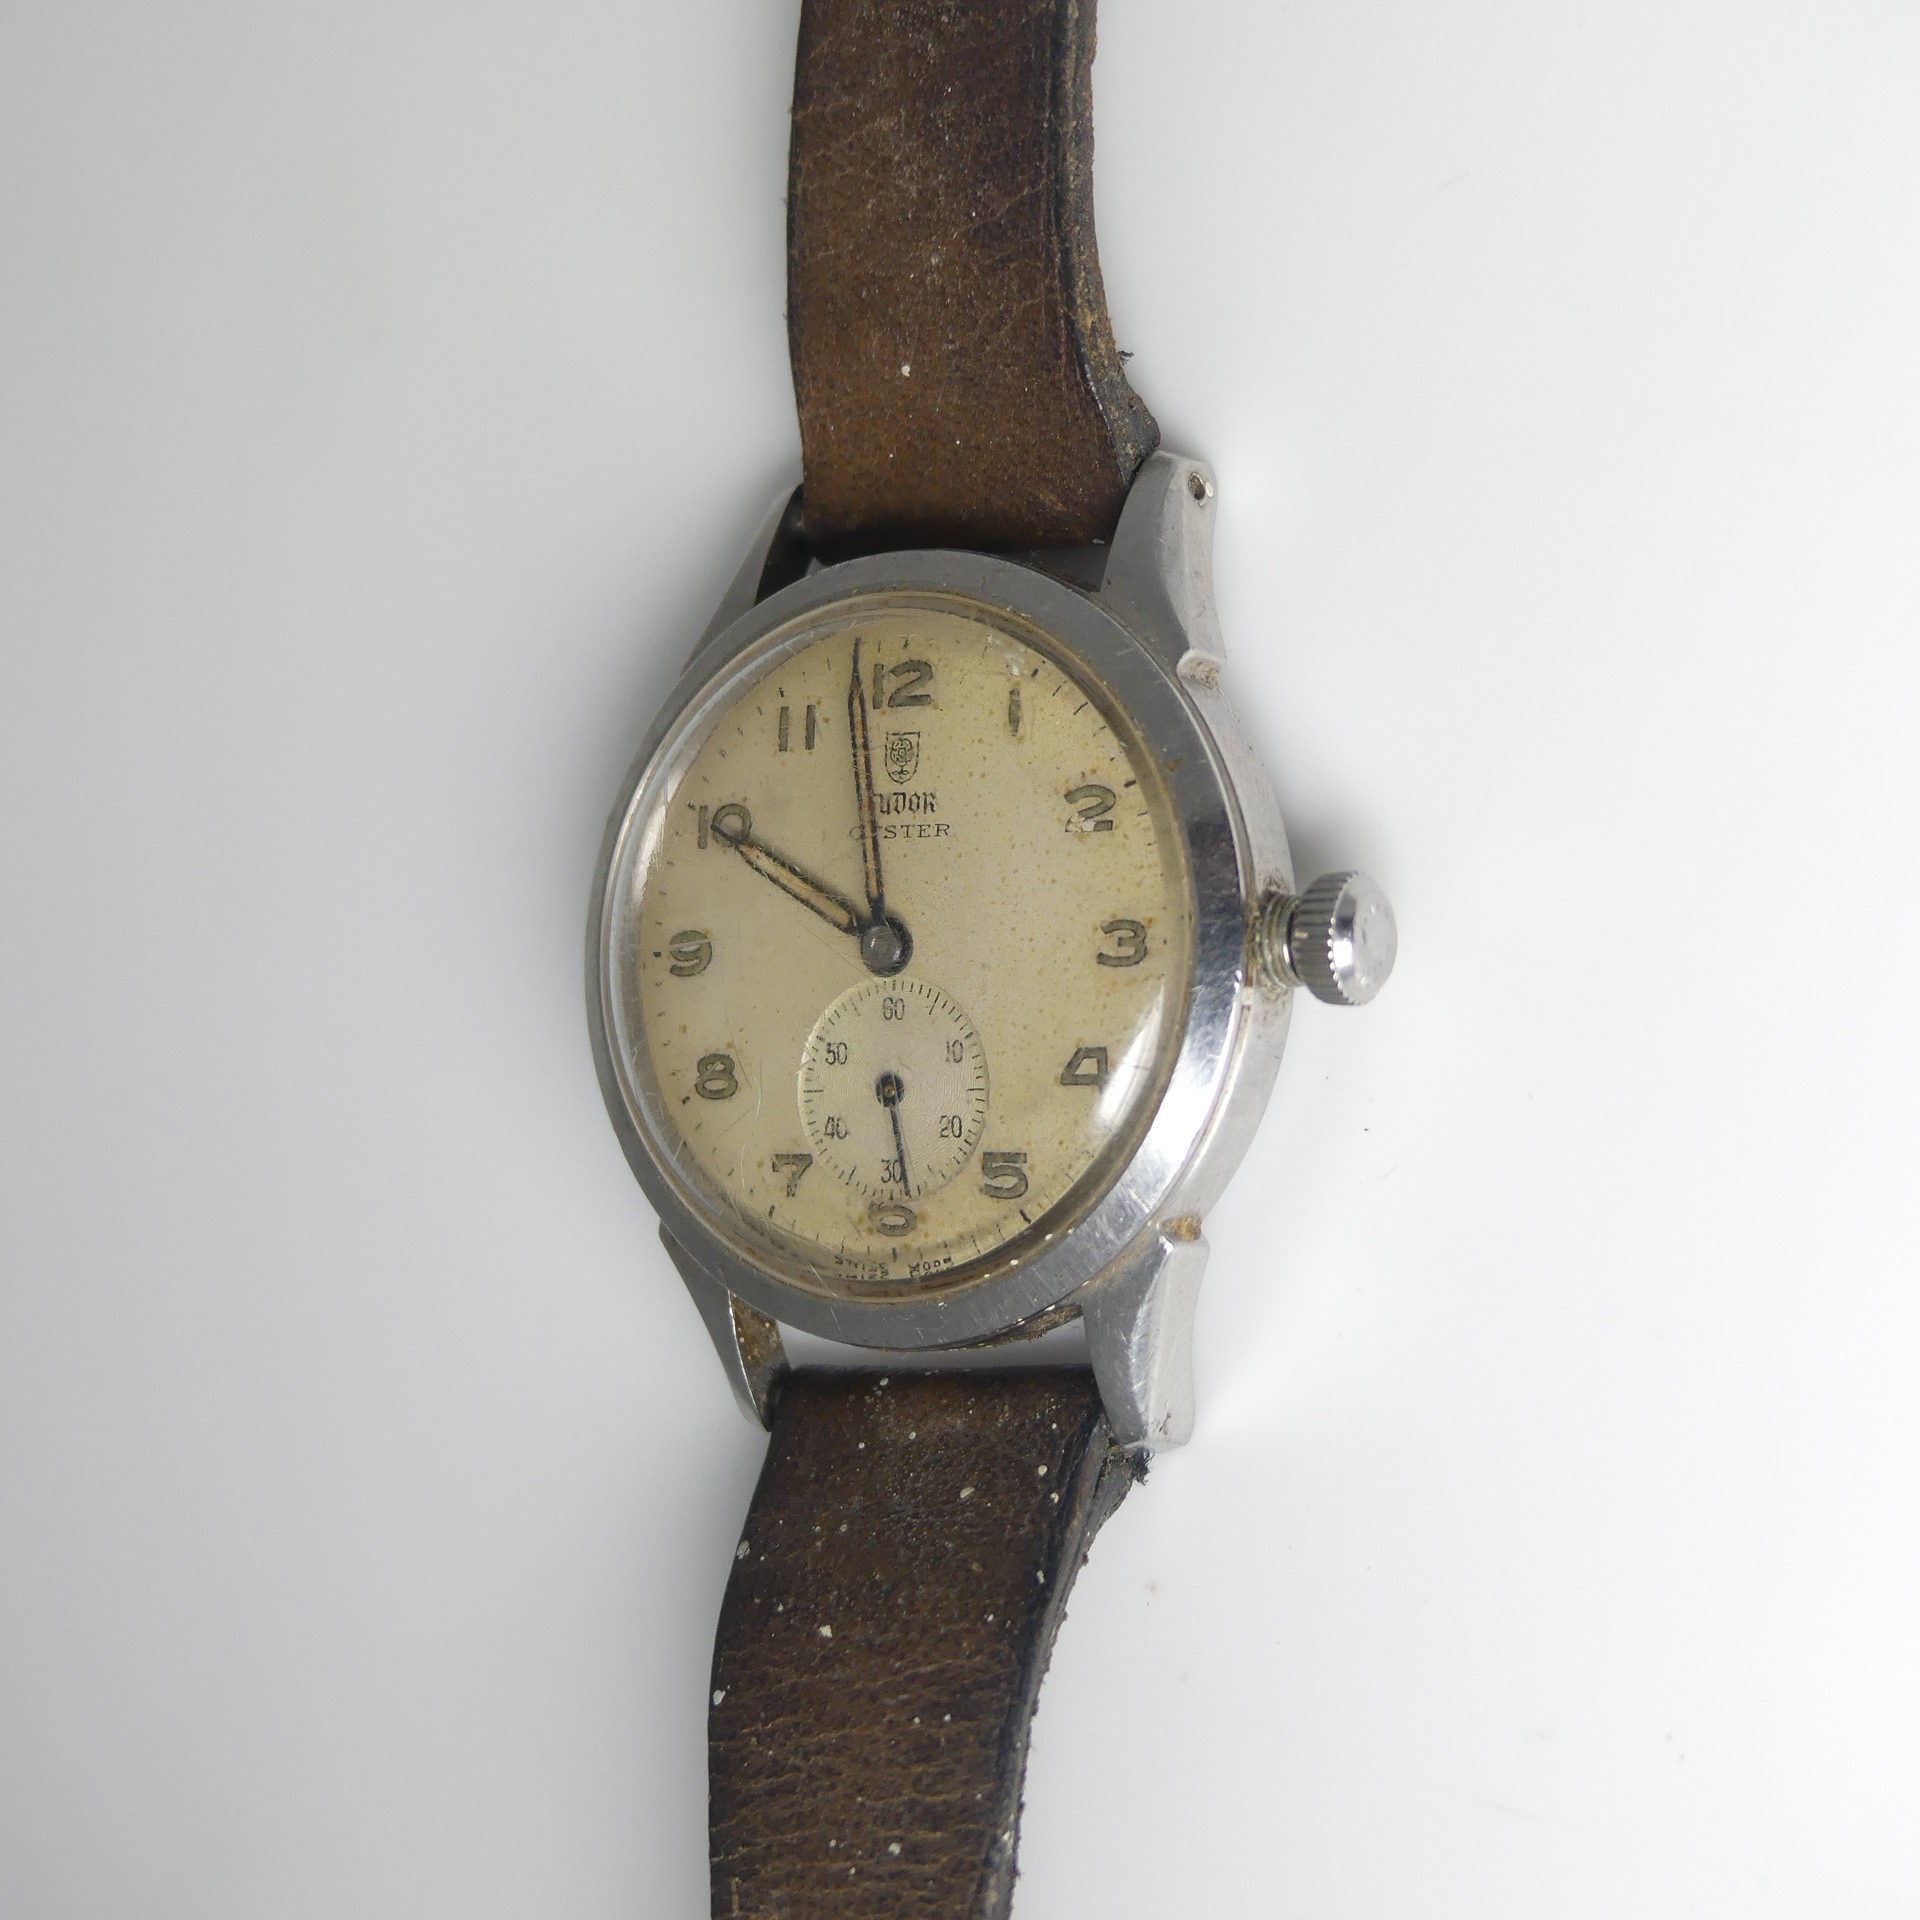 A Tudor Oyster steel Wristwatch, model no. 4540 c. 1940's, with Tudor 17-rubis movement, screw